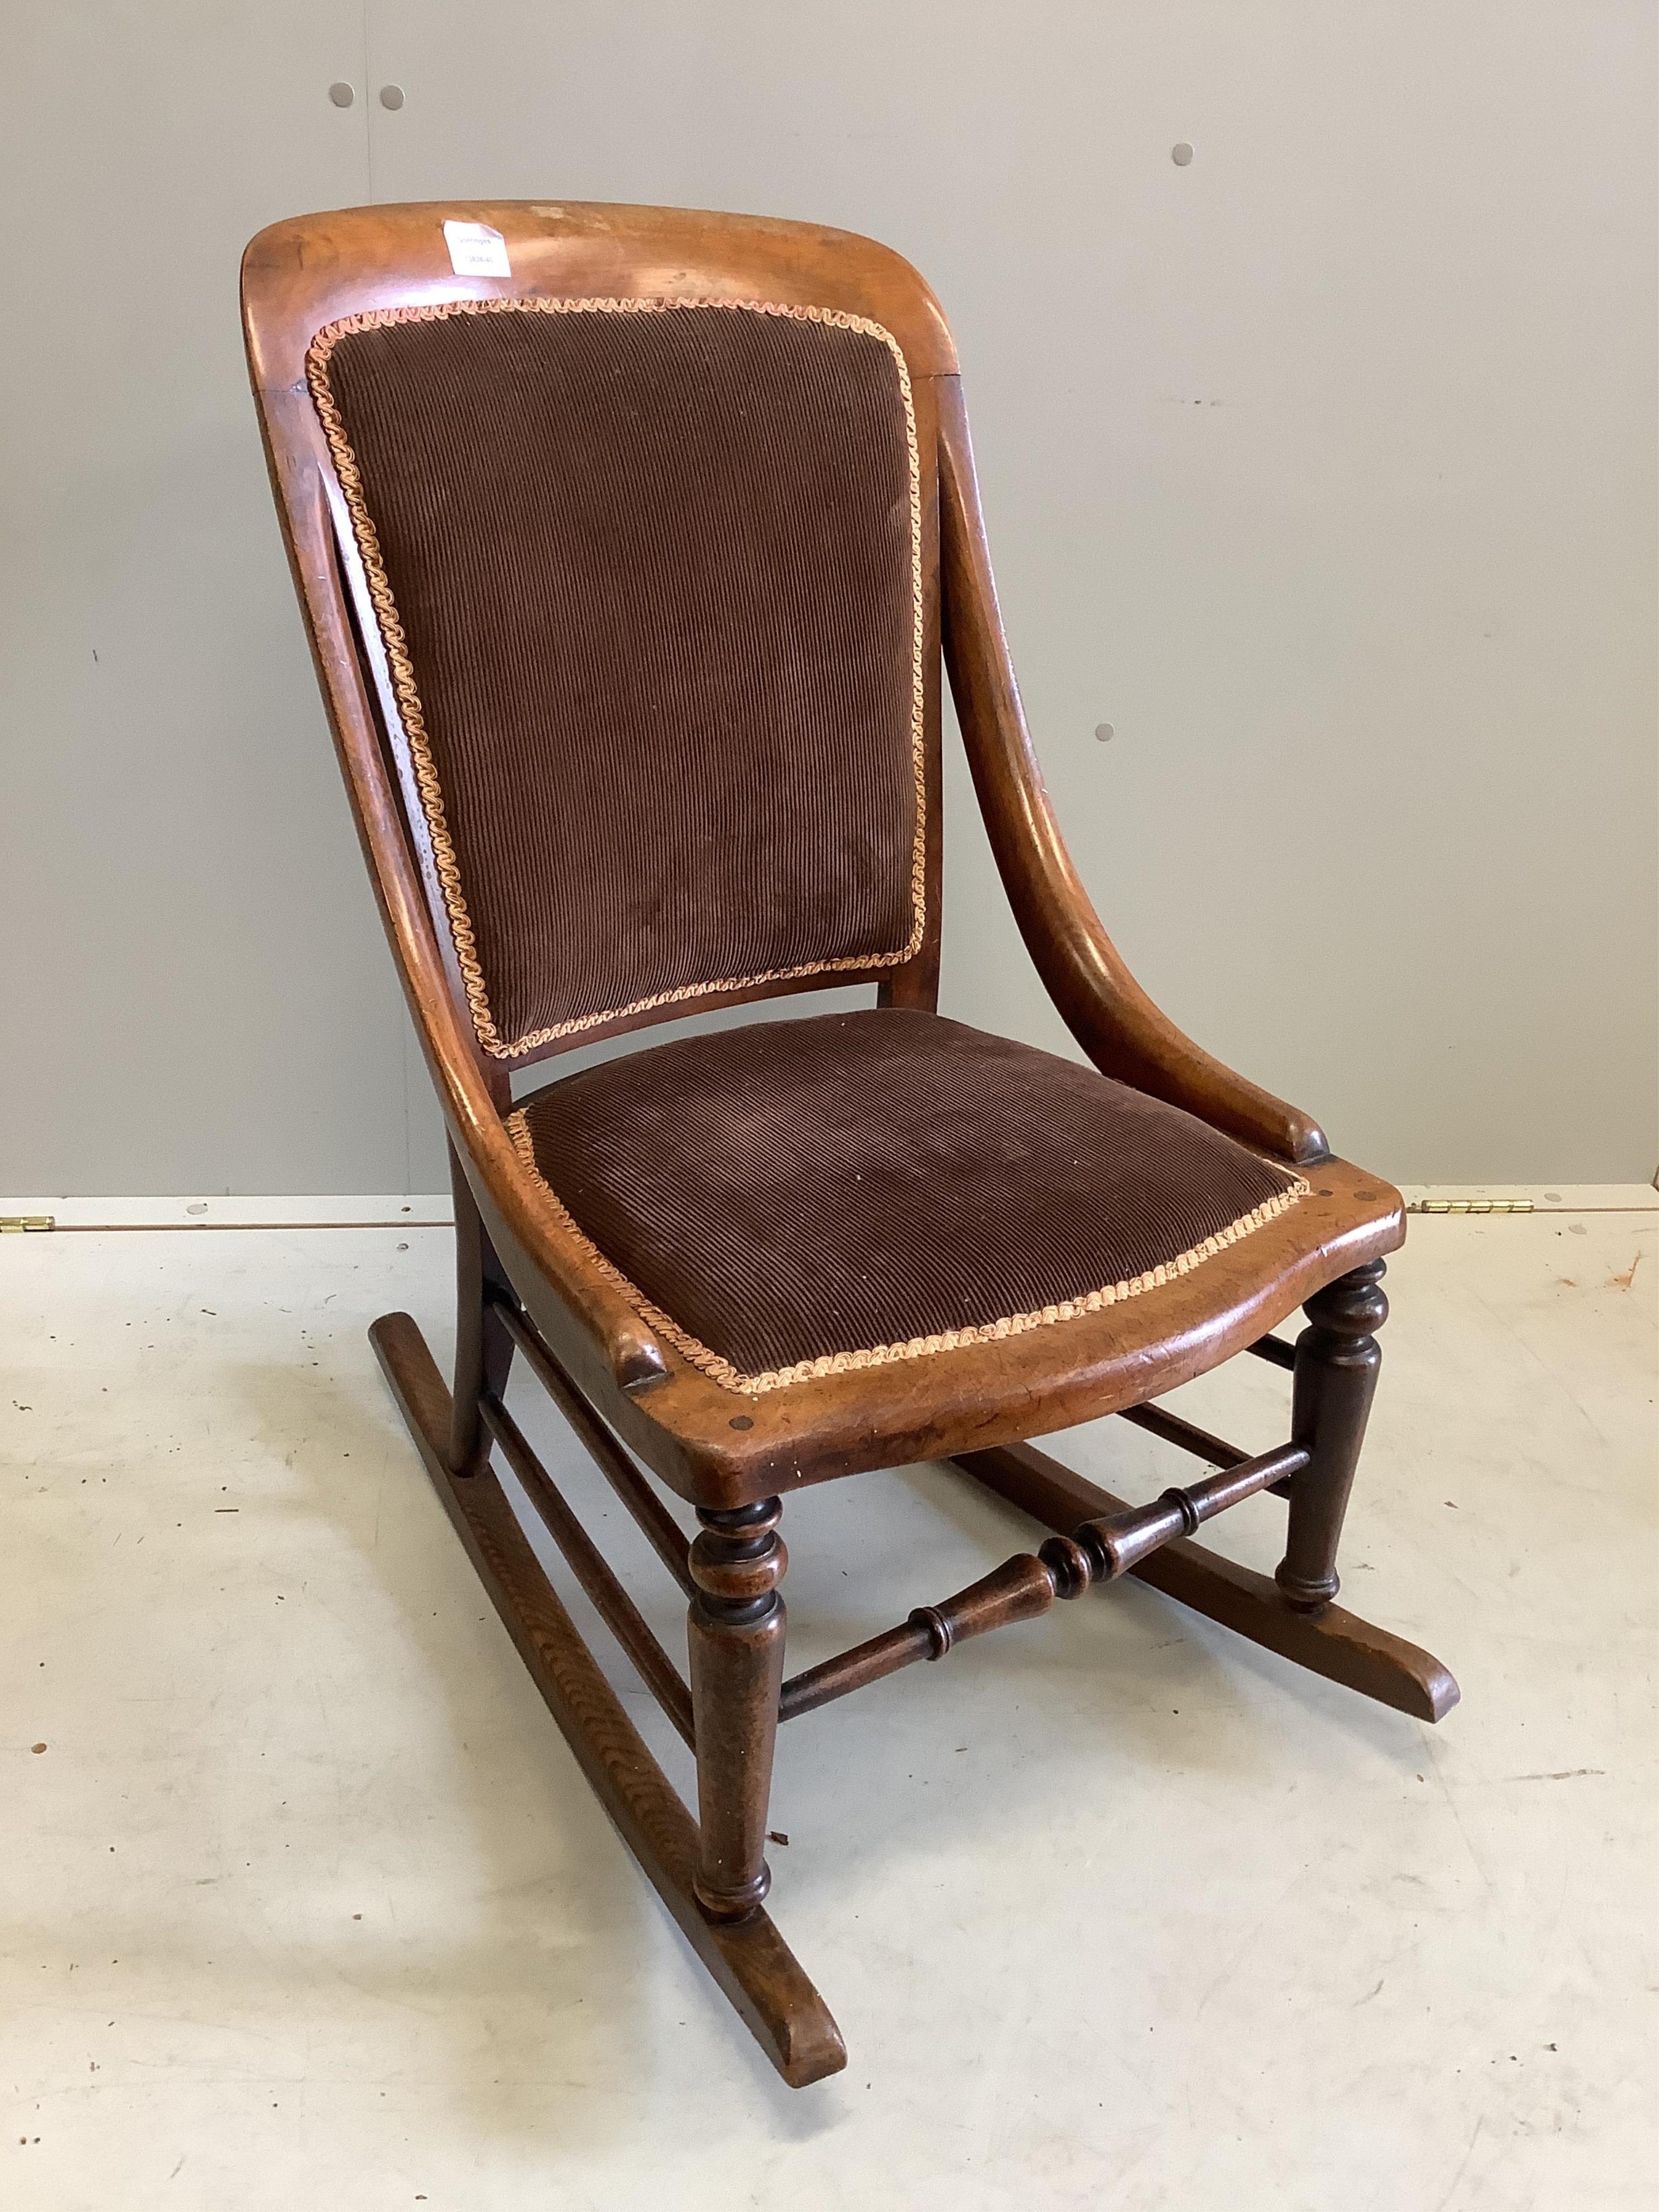 A Victorian mahogany rocking chair, width 49cm, depth 50cm, height 85cm. Condition - fair